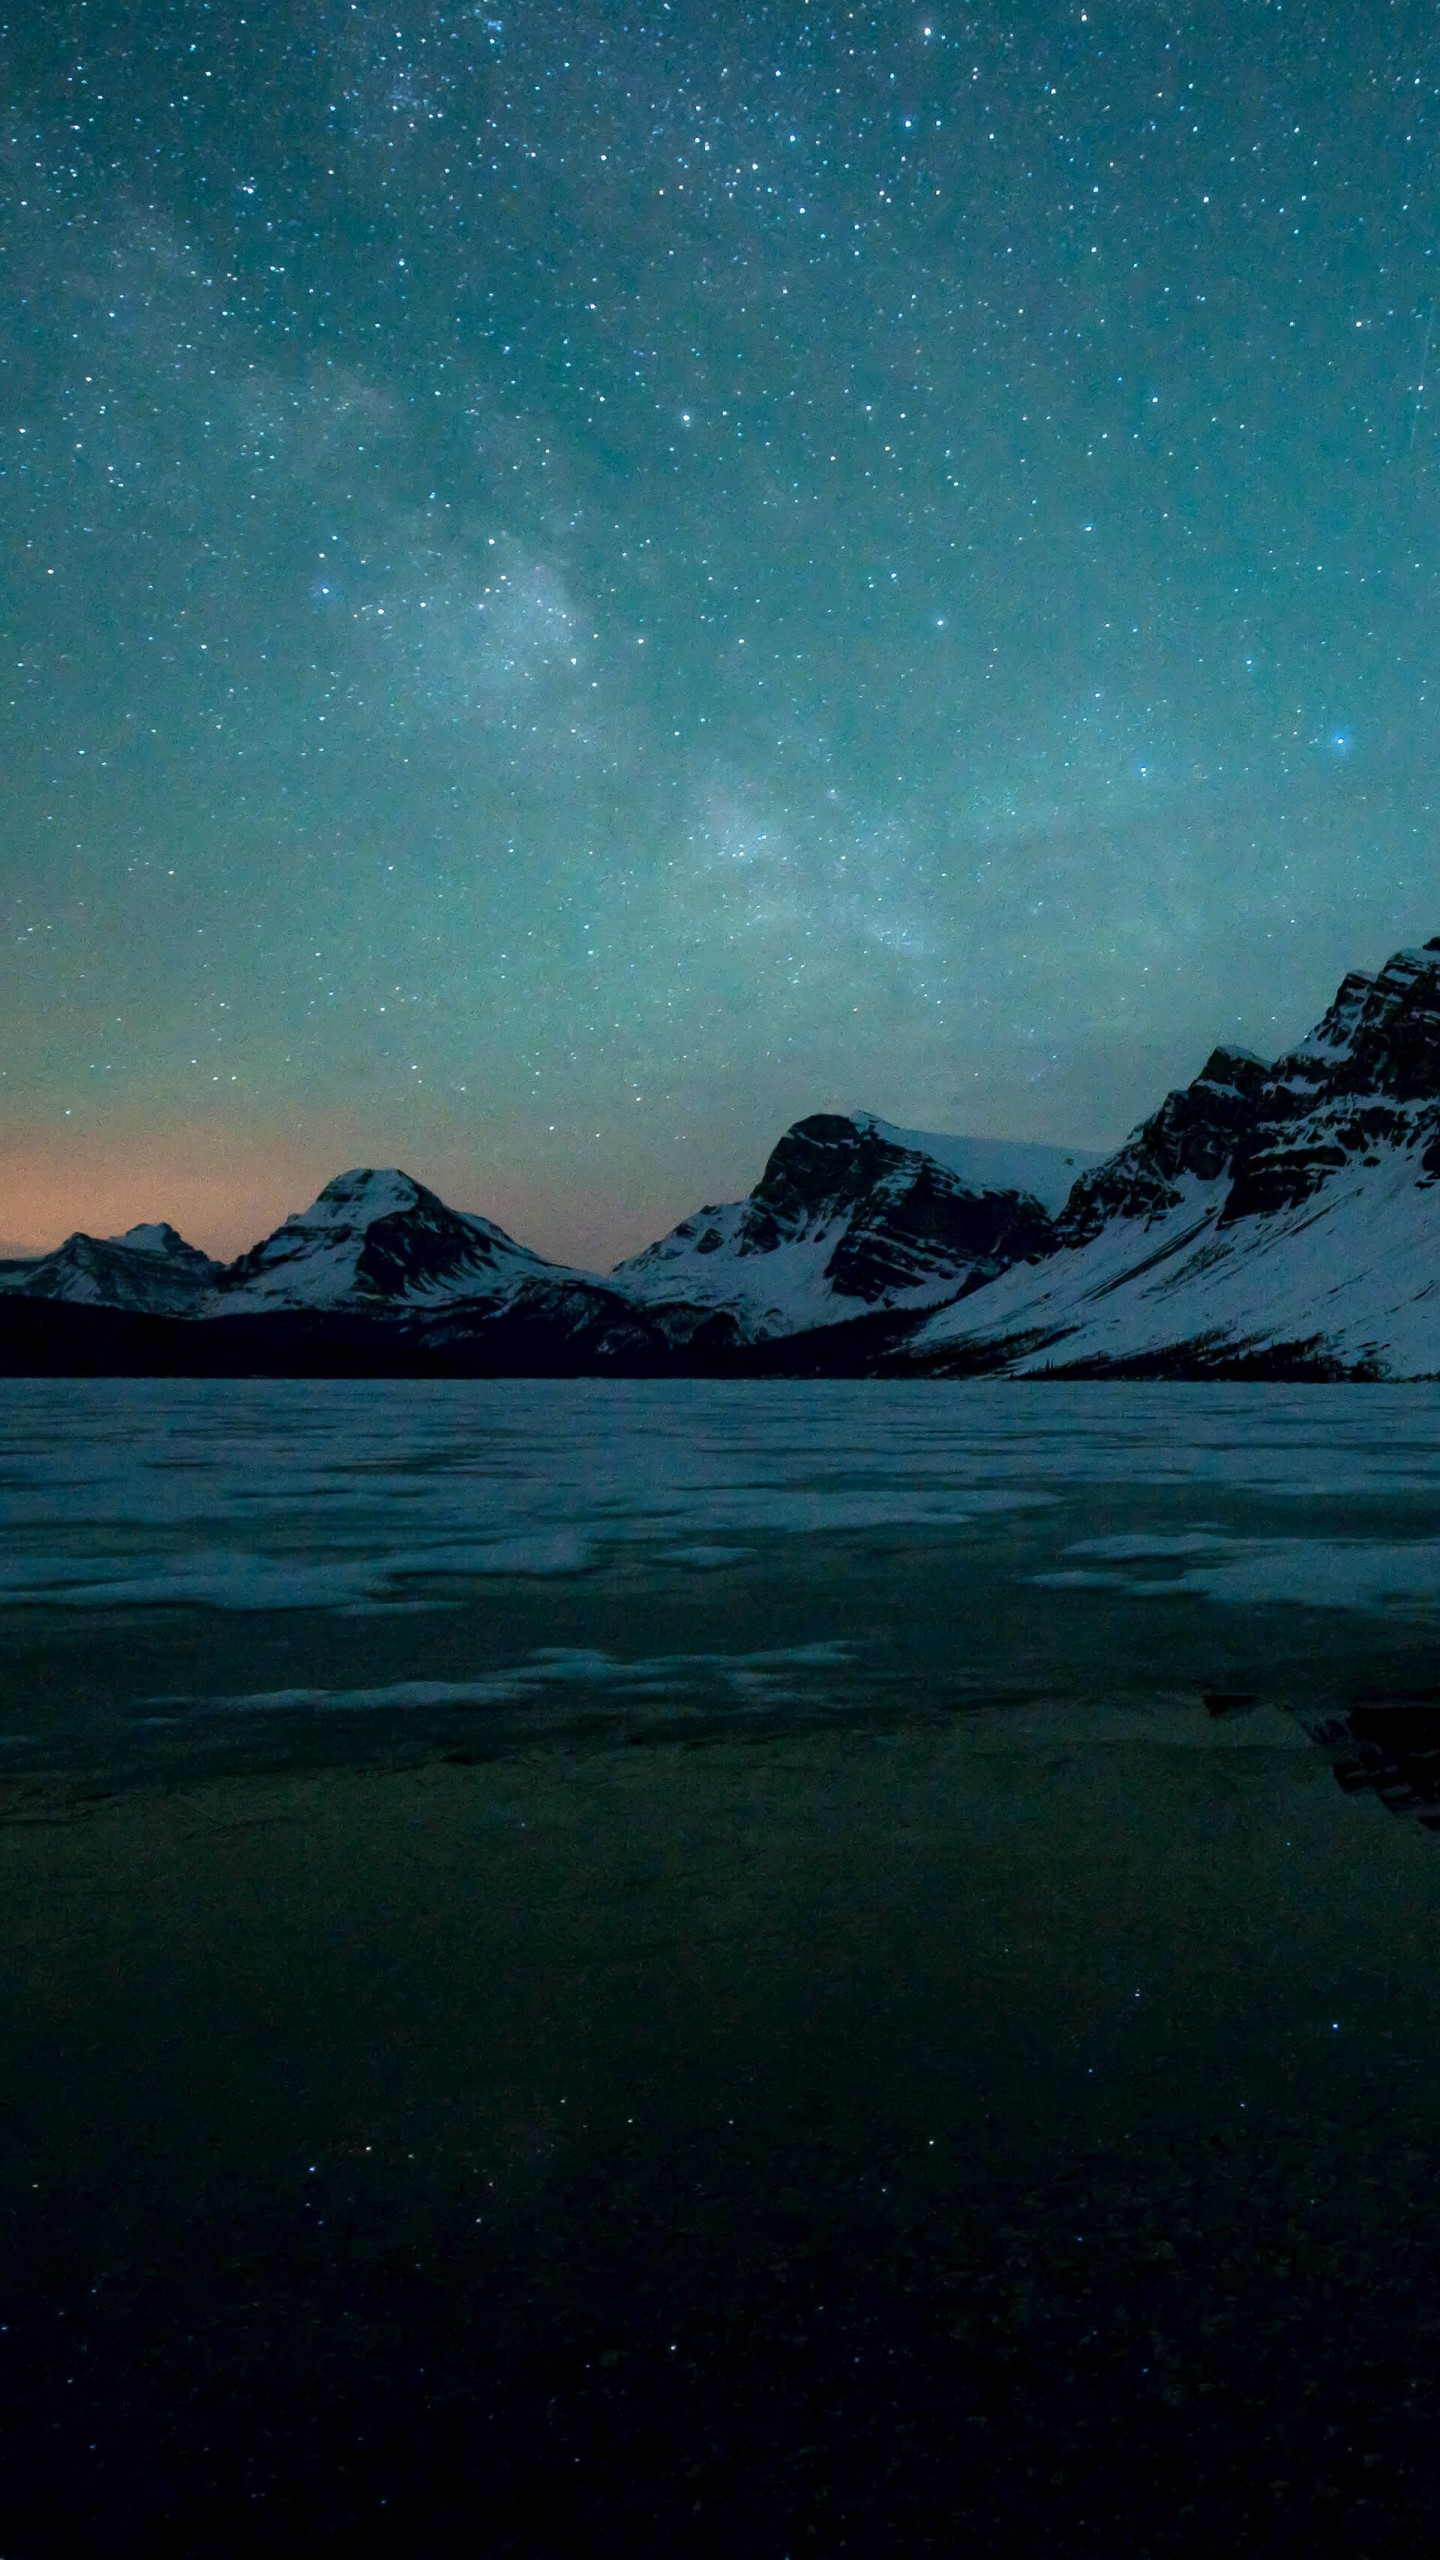 Milky Way over Bow Lake, Alberta, Canada Wallpaper for Google Nexus 6P